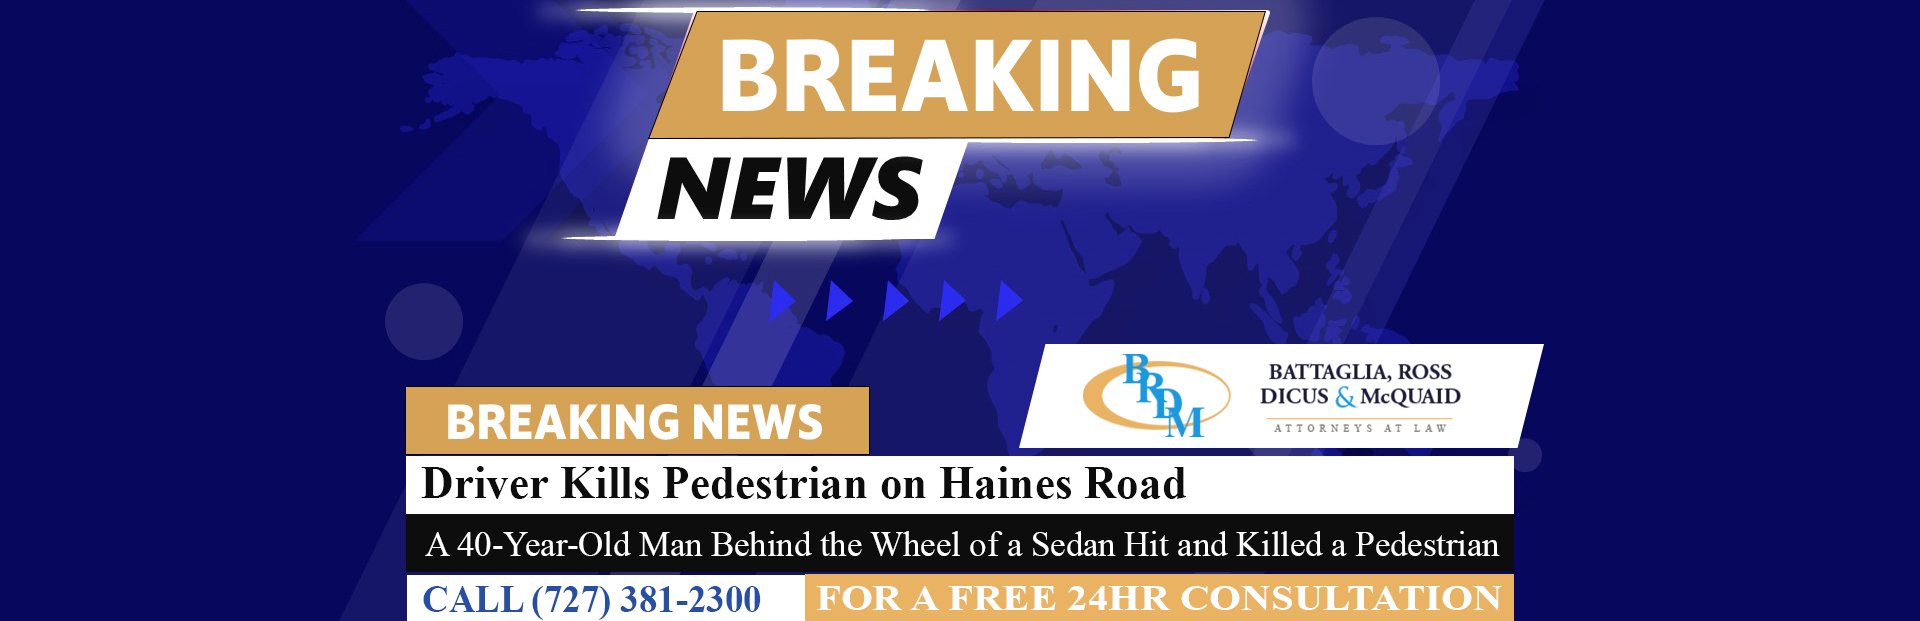 [11-28-22] Driver Kills Pedestrian on Haines Road in Saturday Evening Crash